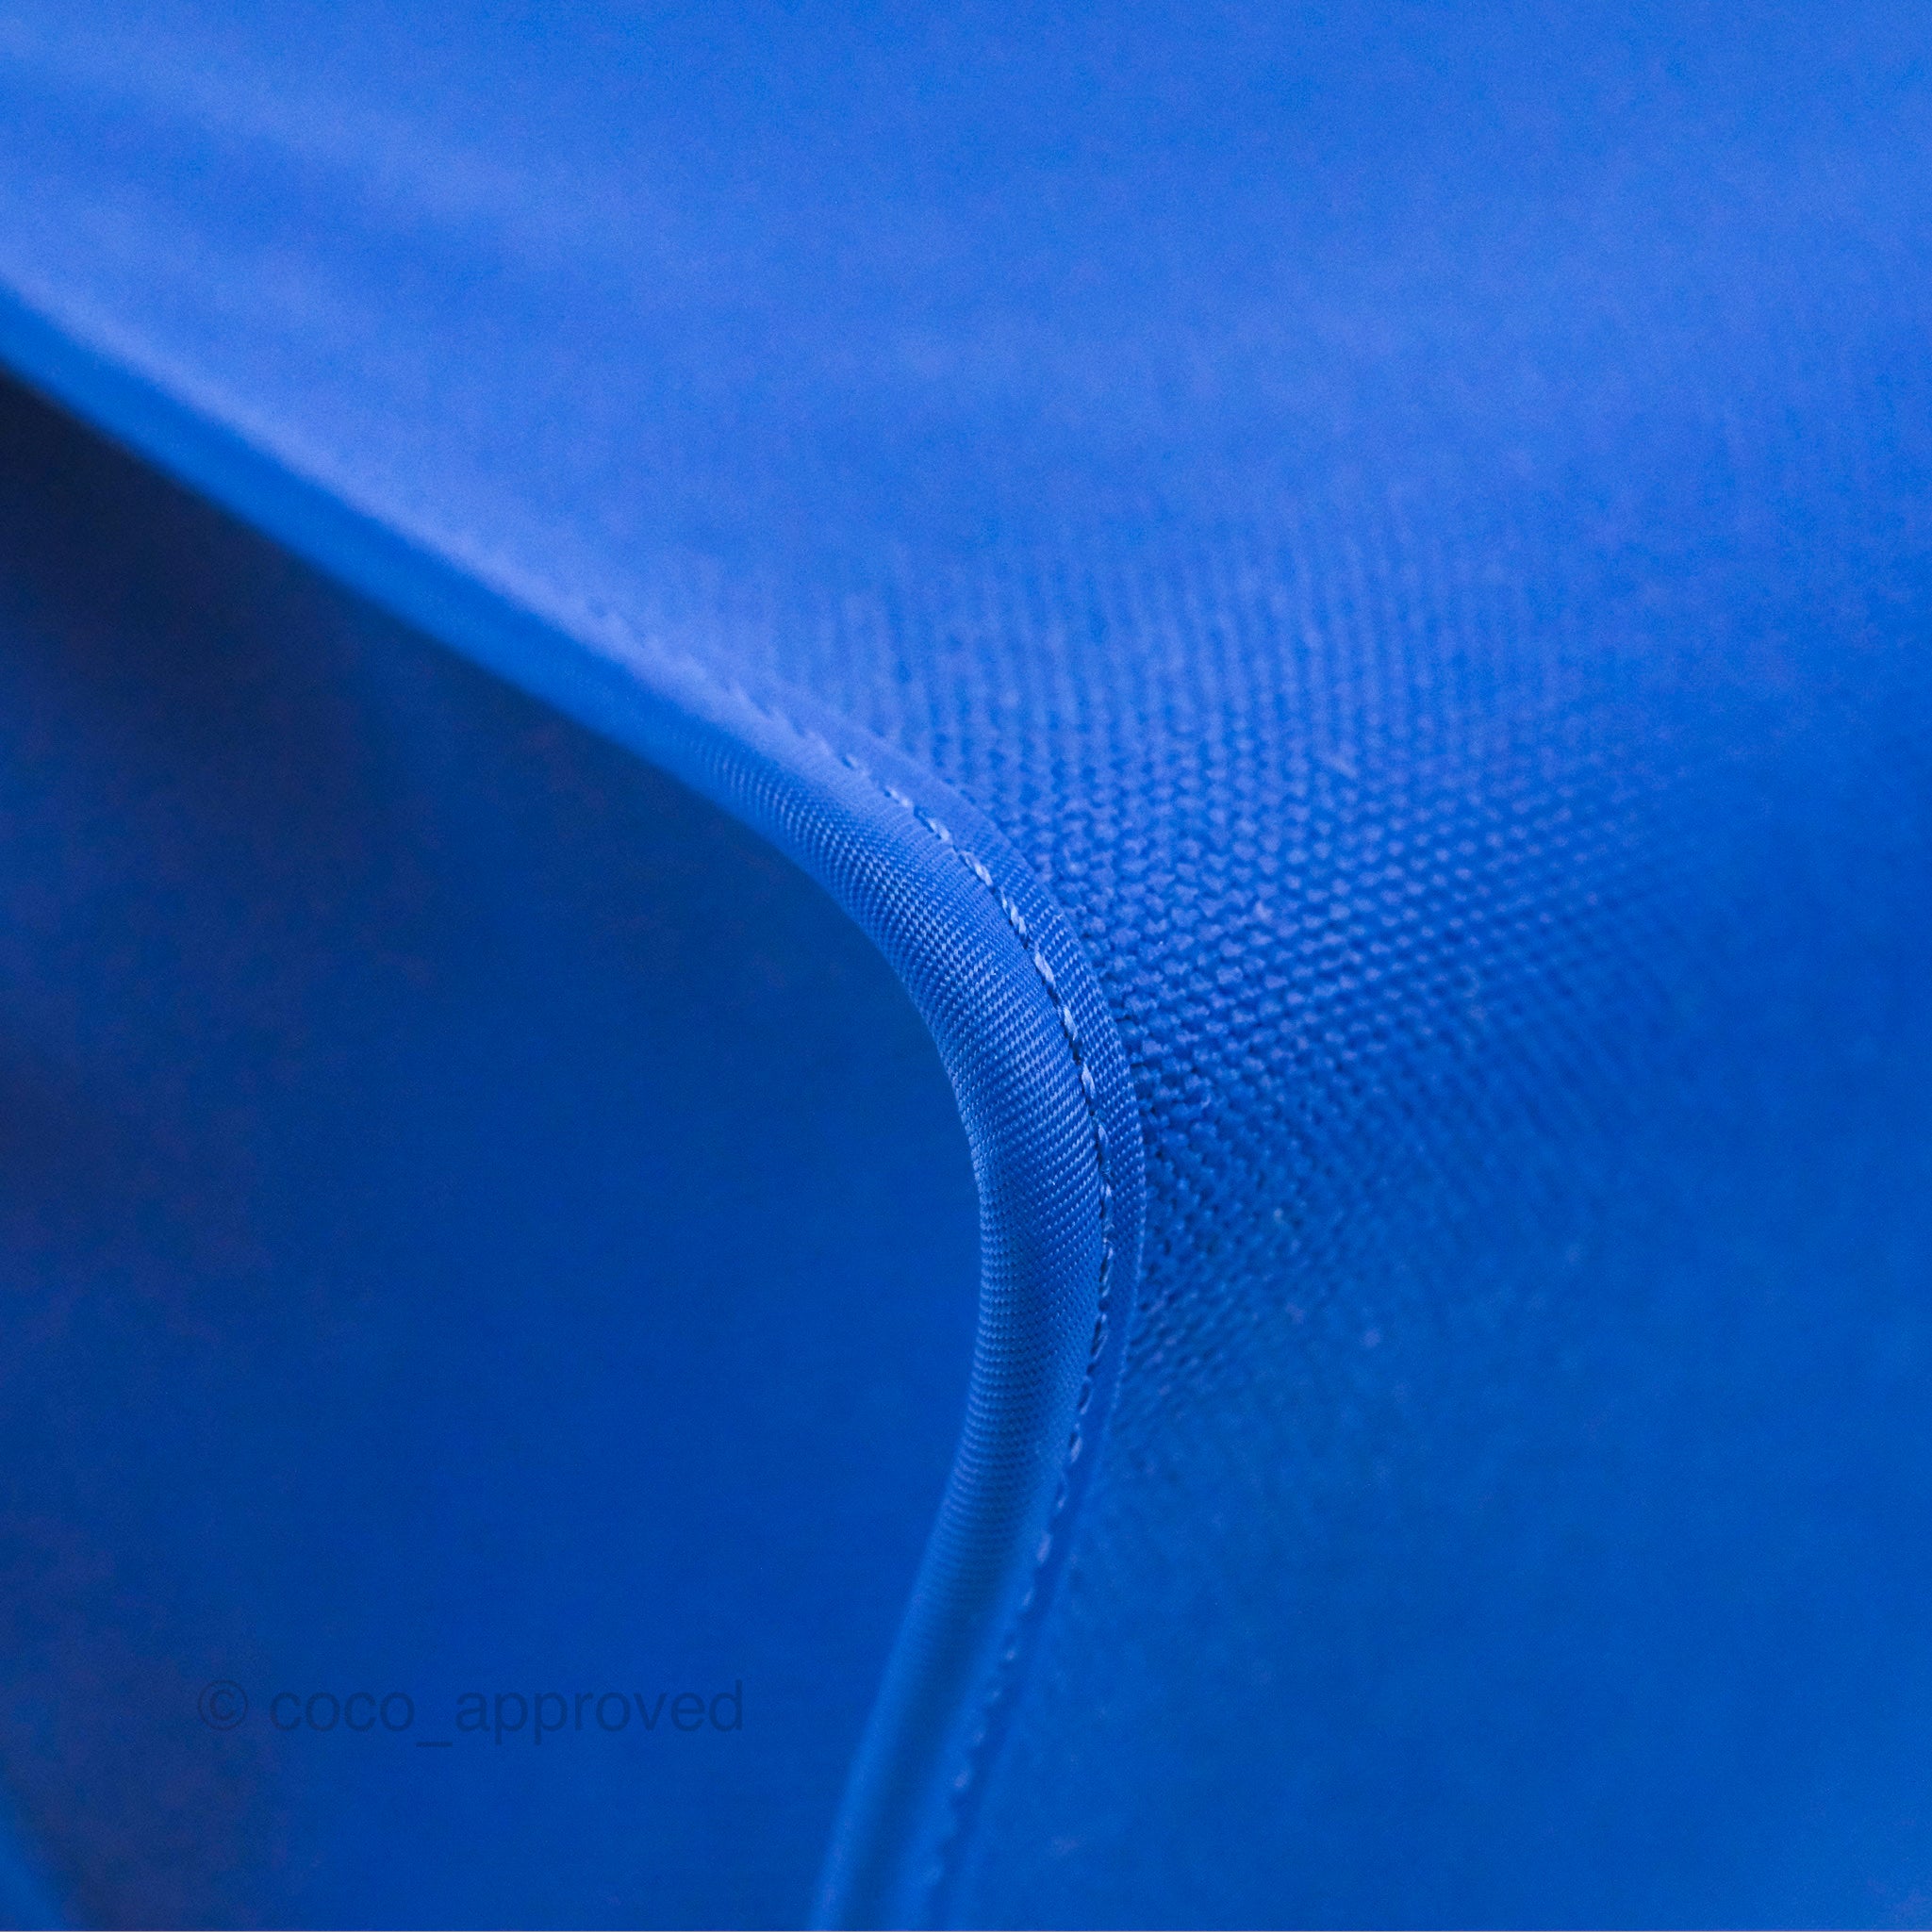 Hermès Herbag Zip 31 Bleu Électrique & Bleu Indigo Canvas Palladium Ha –  Coco Approved Studio